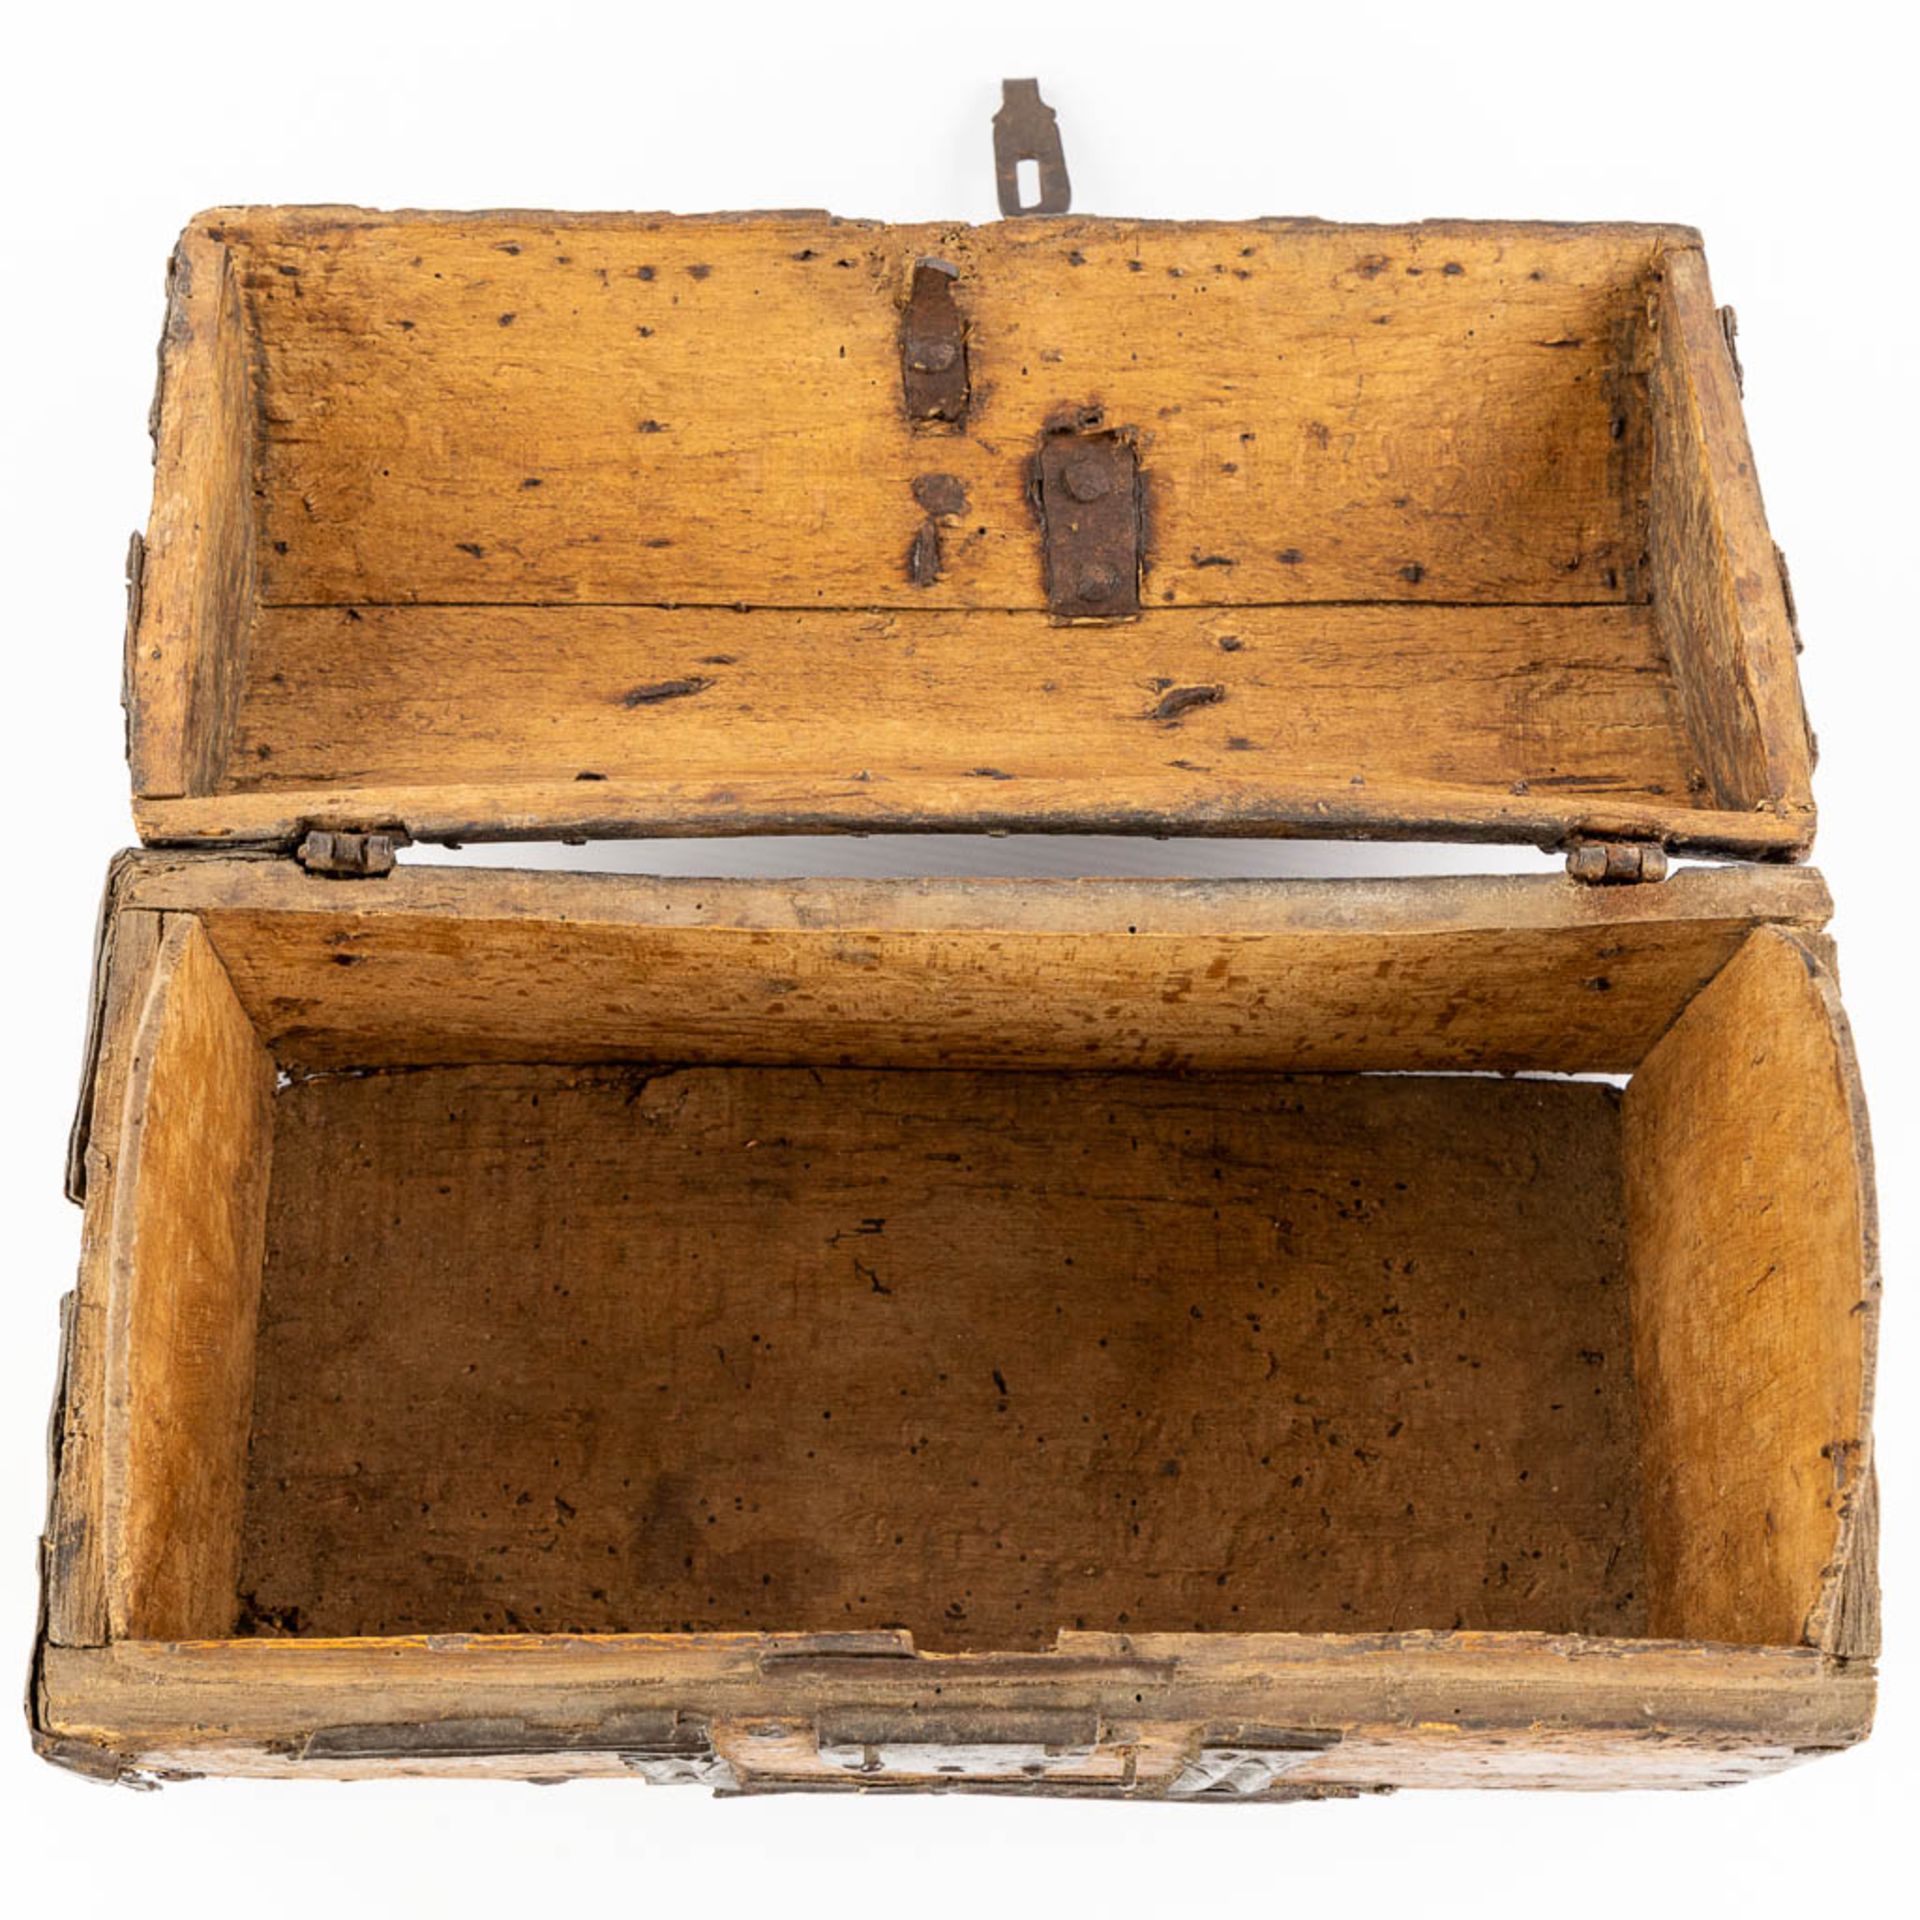 An antique money box or storage chest, wood and wrought iron, 16th/17th C. (L:20 x W:36 x H:22 cm) - Bild 10 aus 14